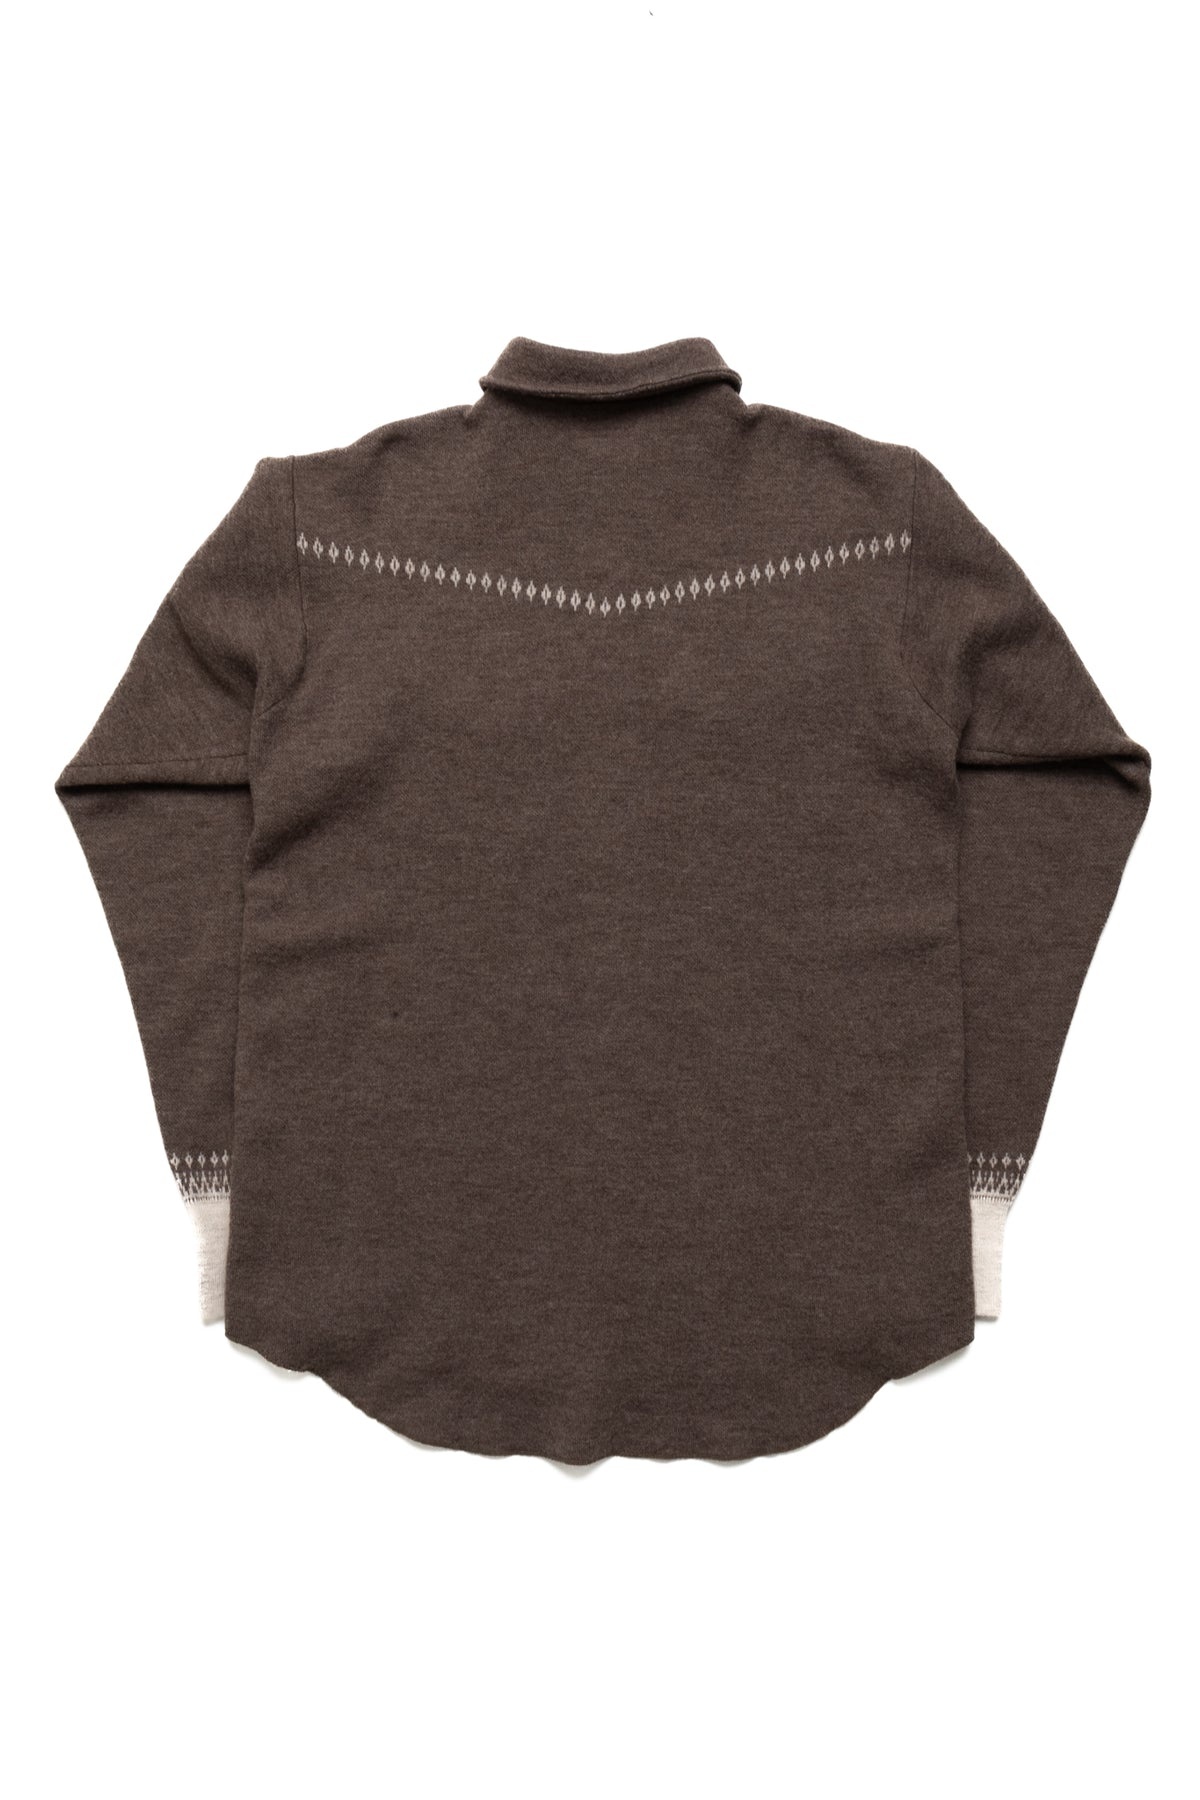 12G Fulling Knit HUSKEY Western Shirt - Brown - 2